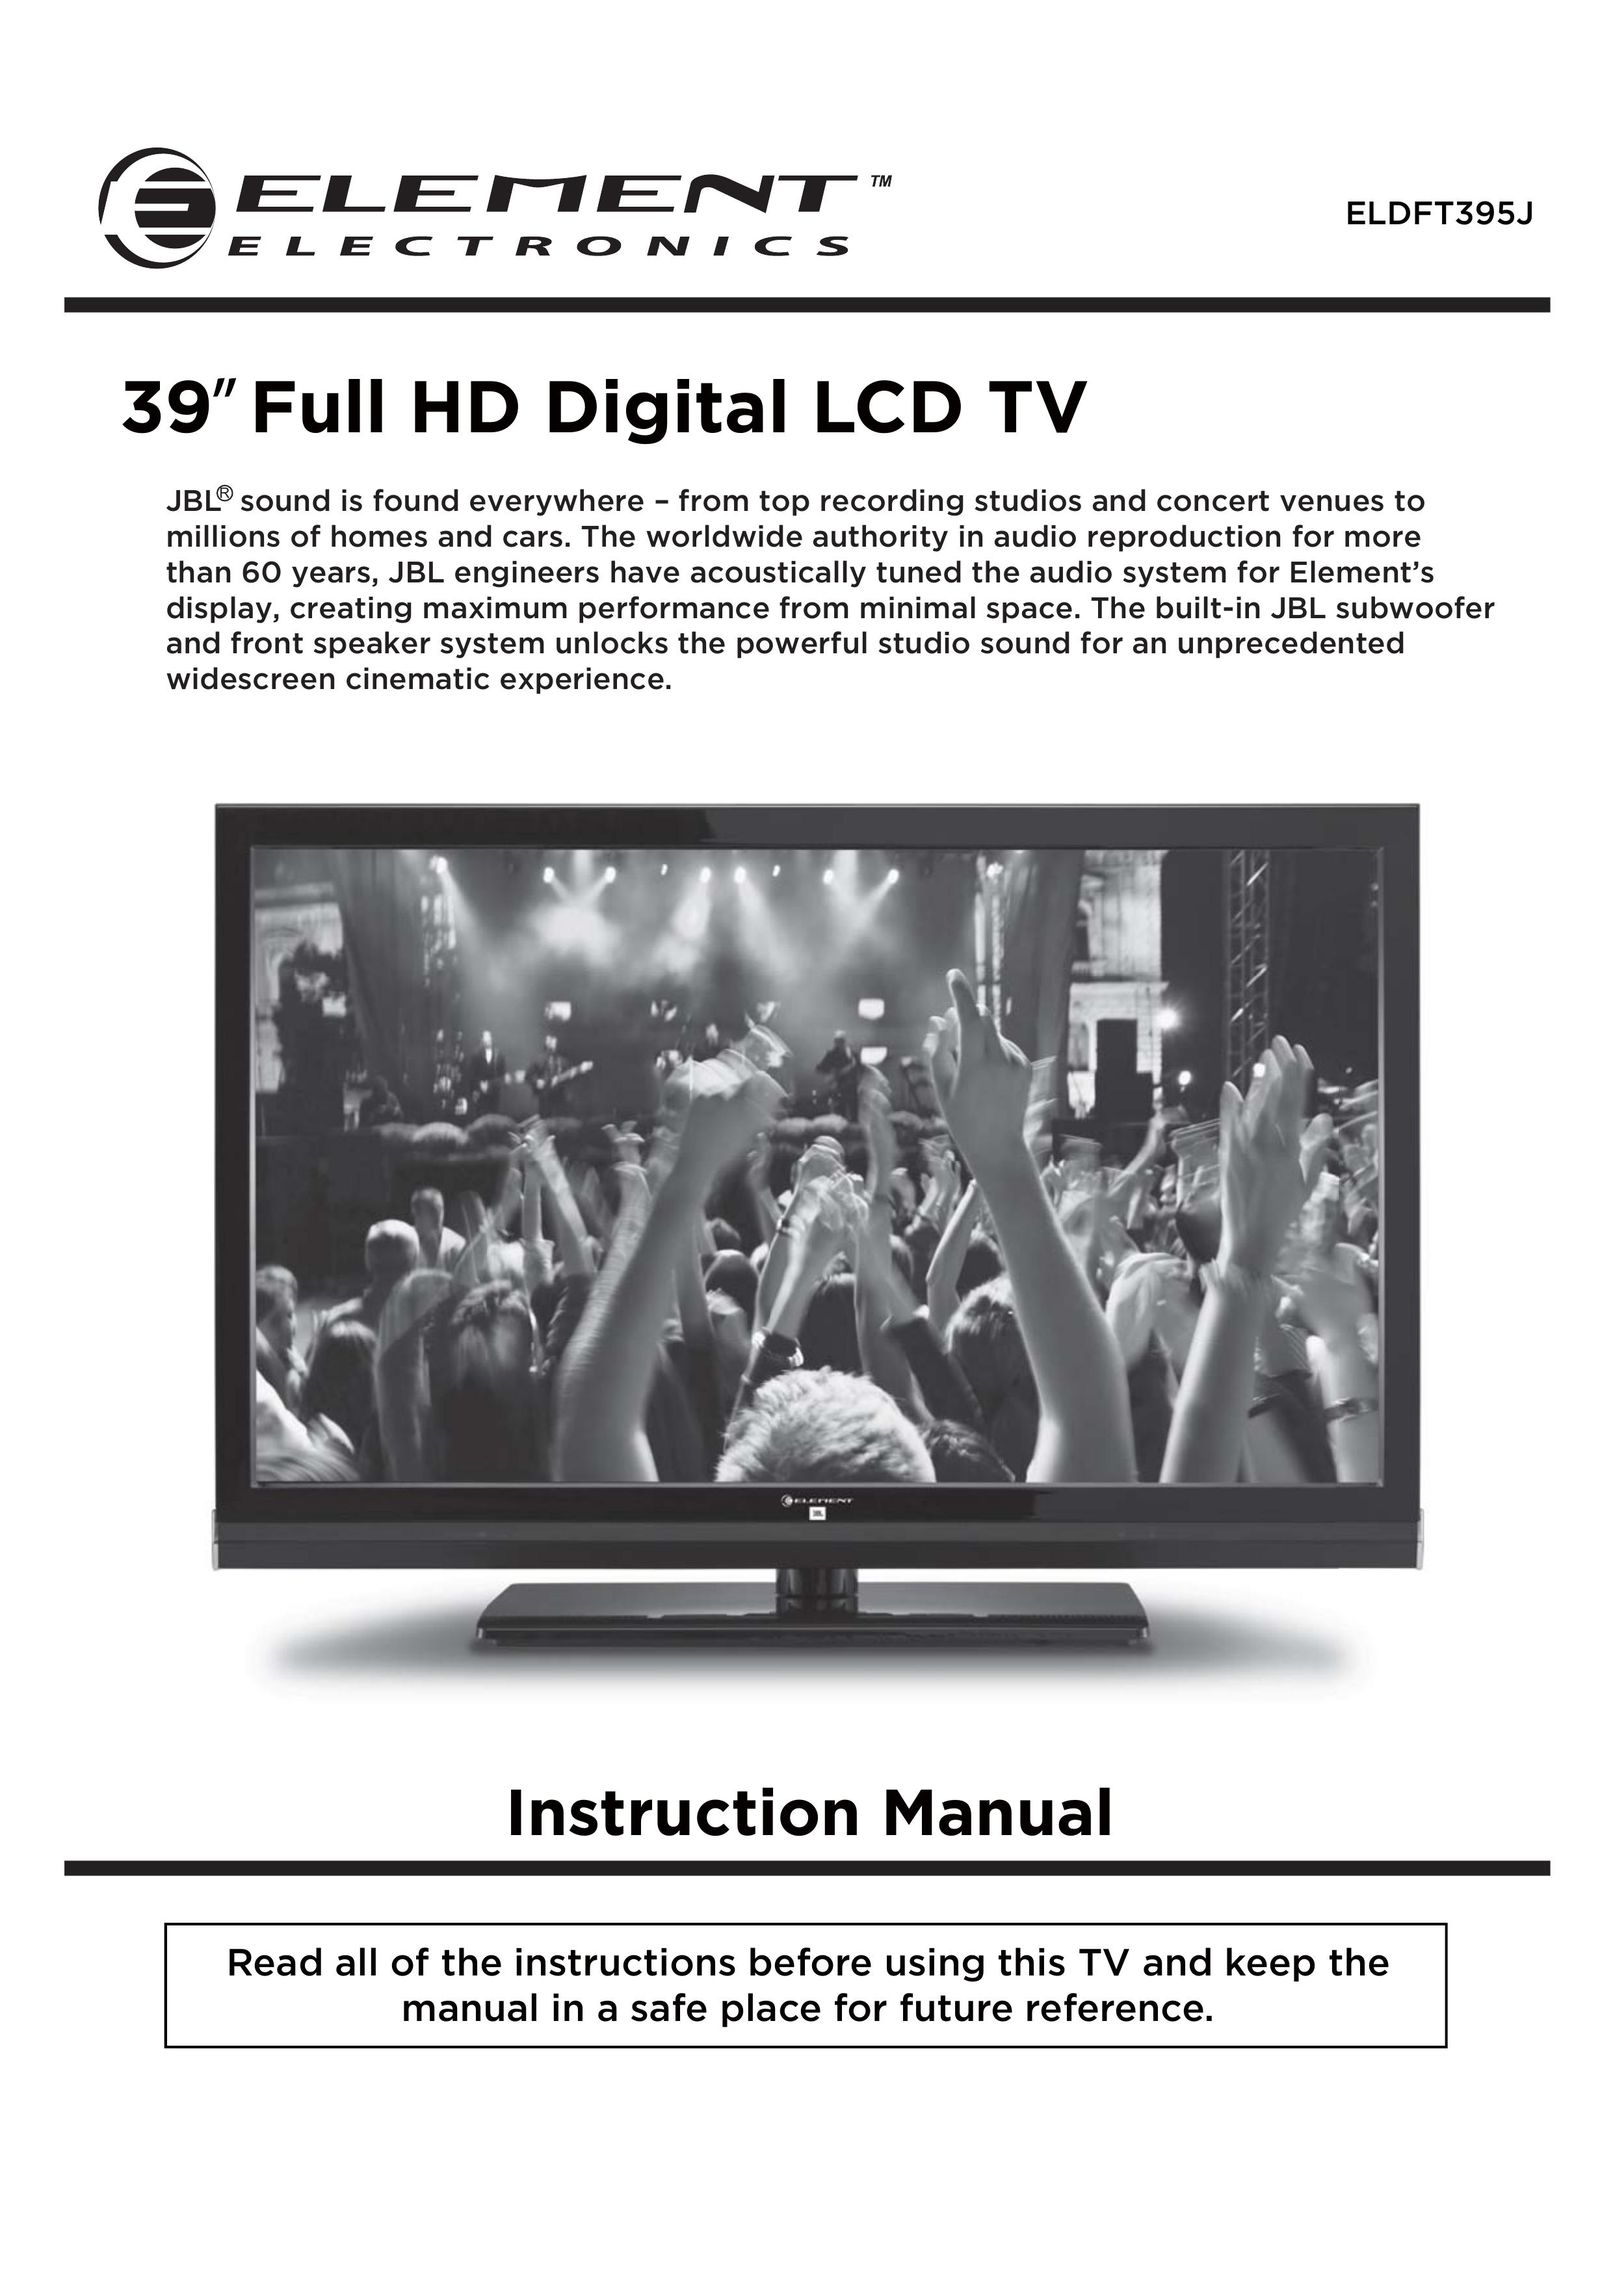 Element Electronics ELDFT395J Flat Panel Television User Manual